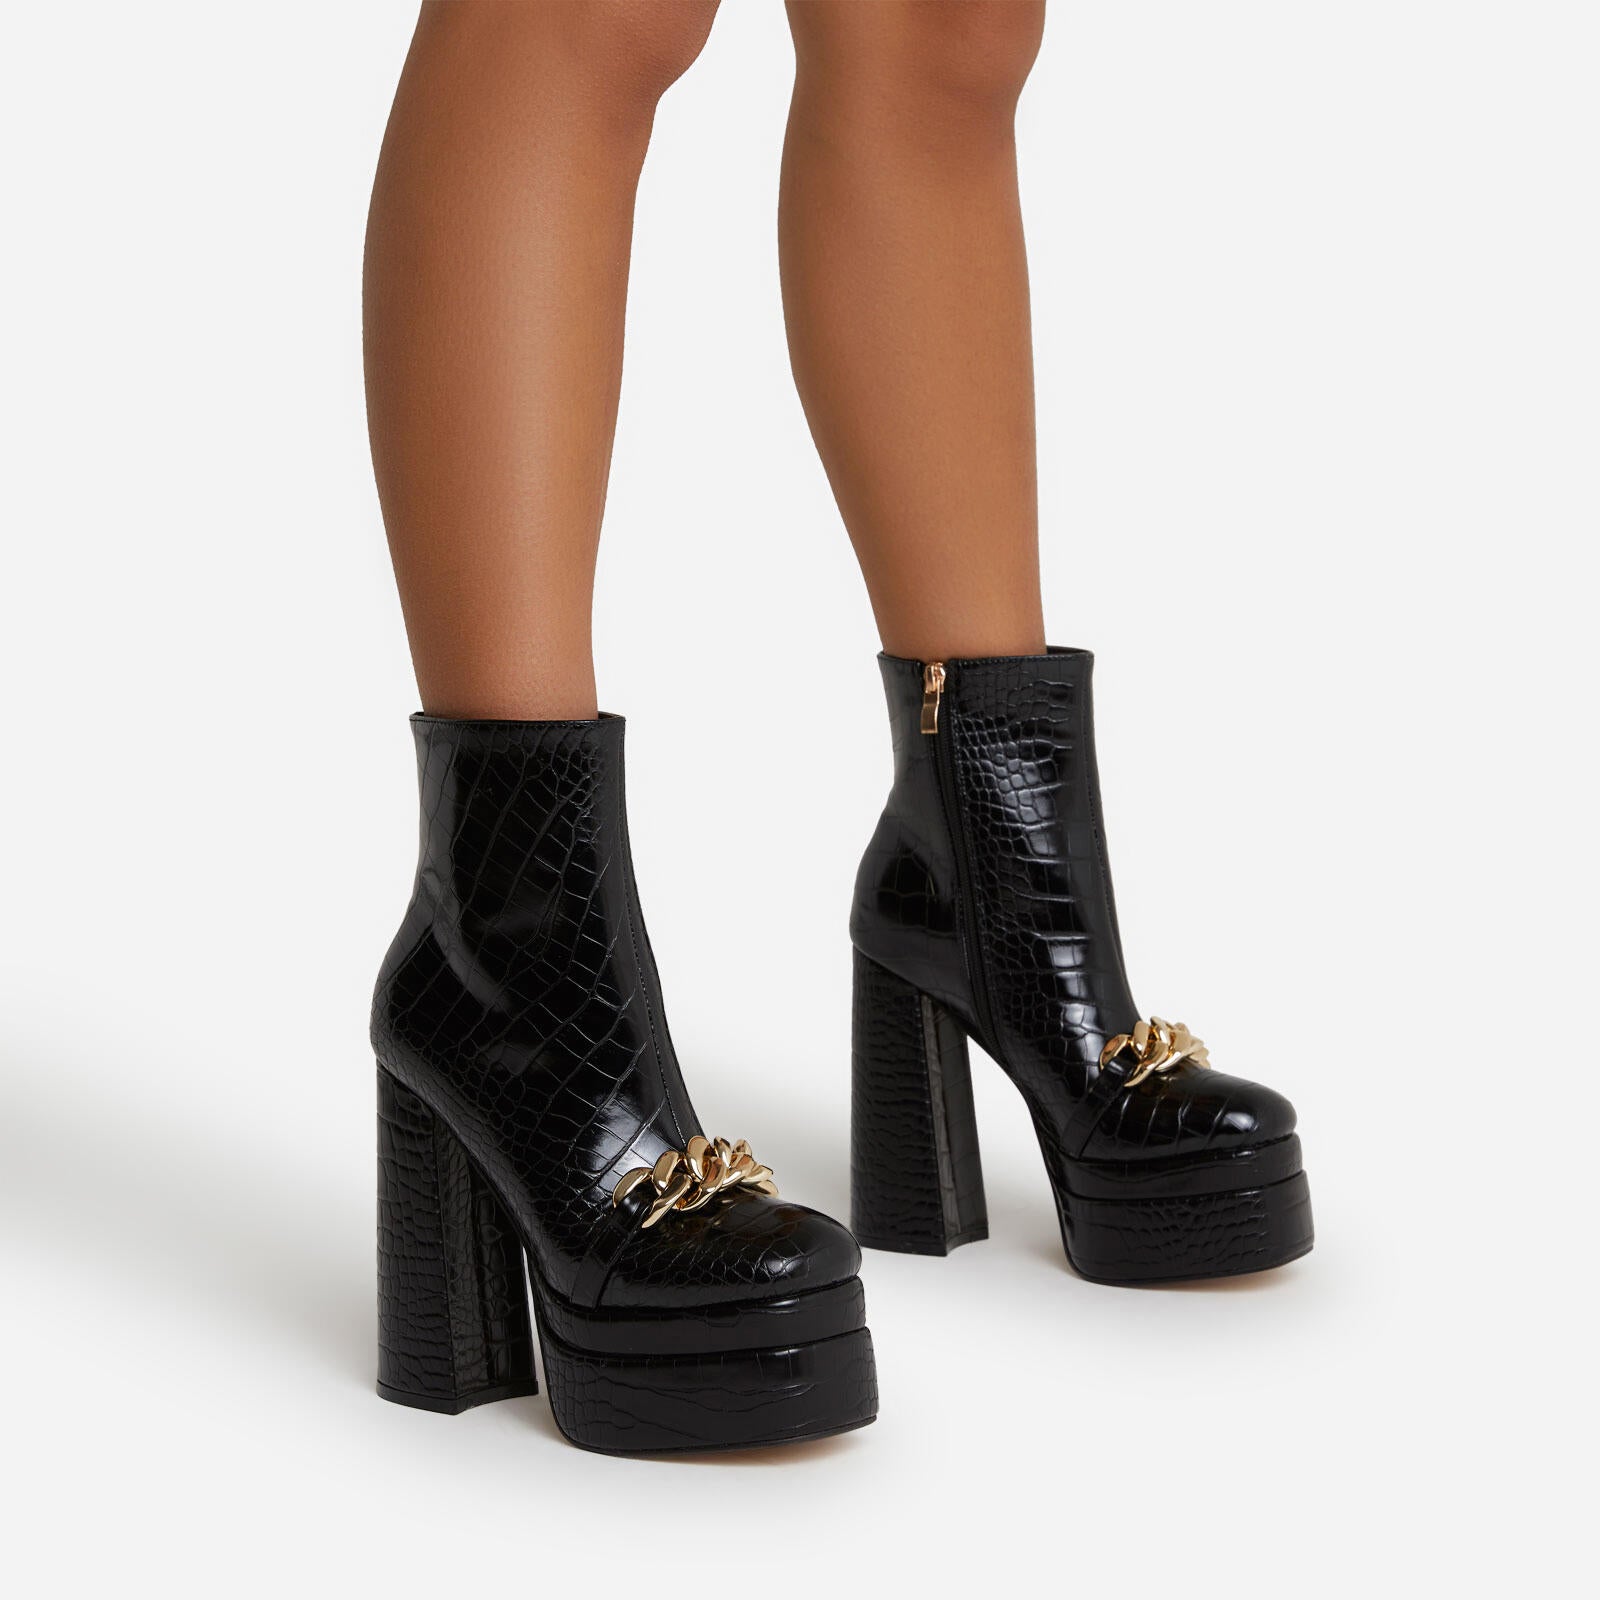 Bigsizeheels Platform super high heel sexy short boots - Black freeshipping - bigsizeheel®-size5-size15 -All Plus Sizes Available!